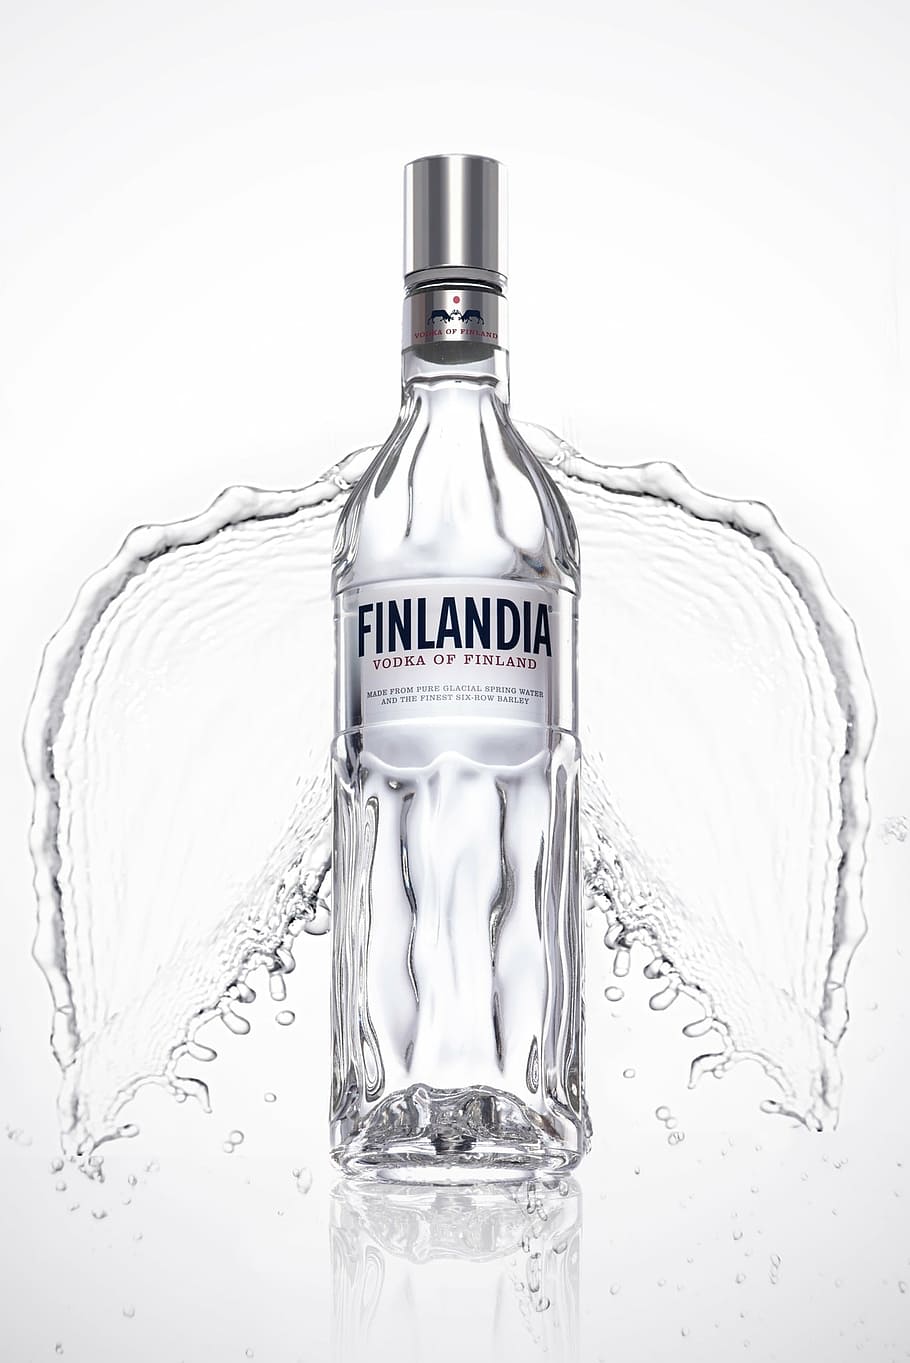 Finlandia liquor bottle, vodka, advertising, creative, drink